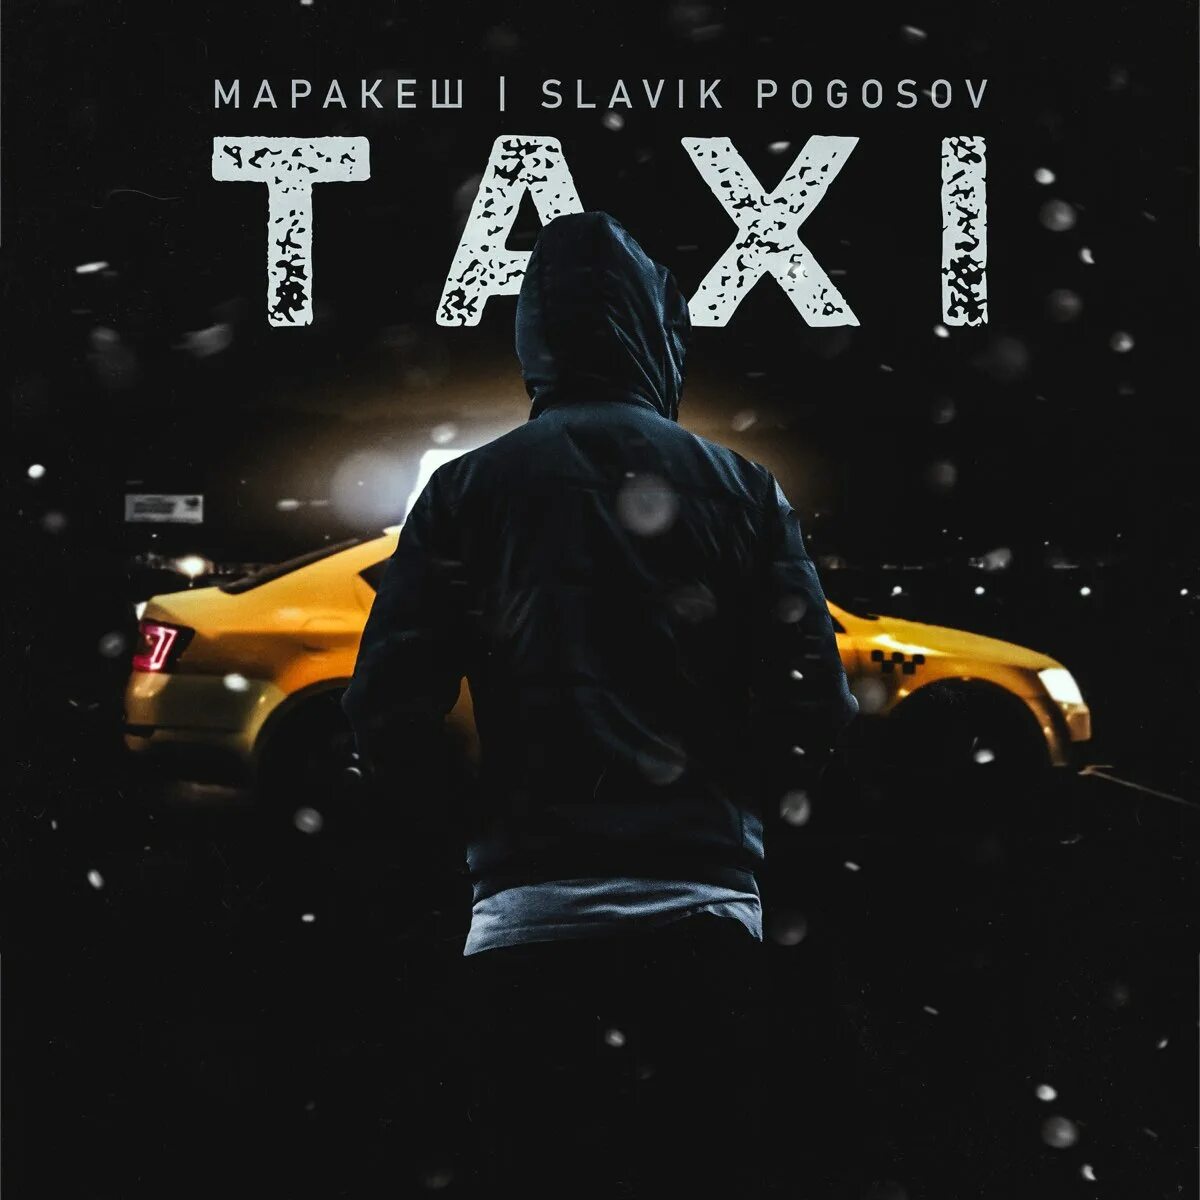 Маракеш feat. Slavik Pogosov Taxi. Marakesh альбом. Marakesh обложка альбома. Slavik Pogosov альбом.